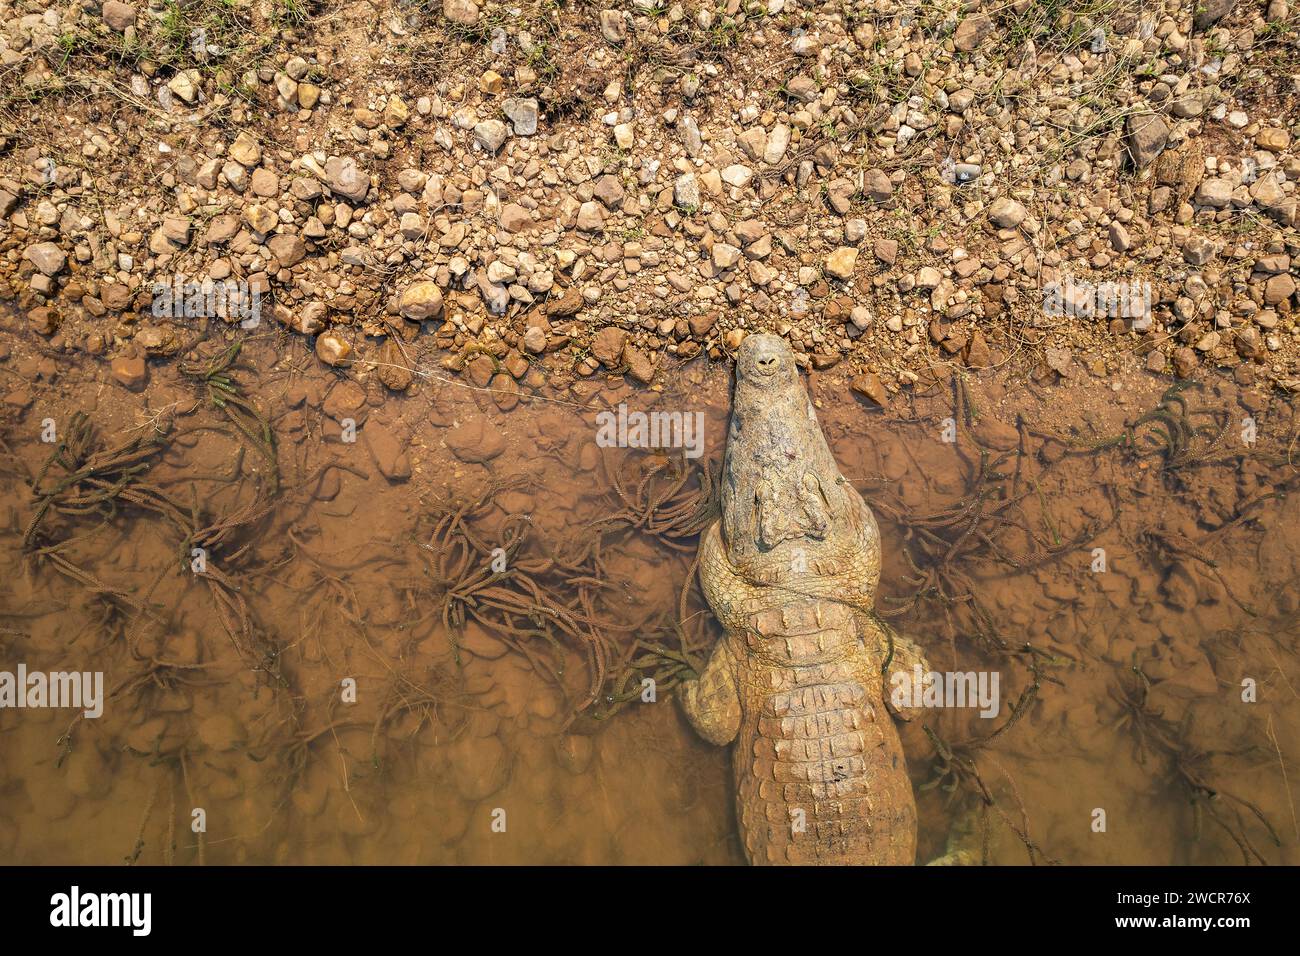 A large Nile Crocodile, Crocodylus niloticus, is seen from an aerial drone shot in Zimbabwe's Lake Kariba. Stock Photo